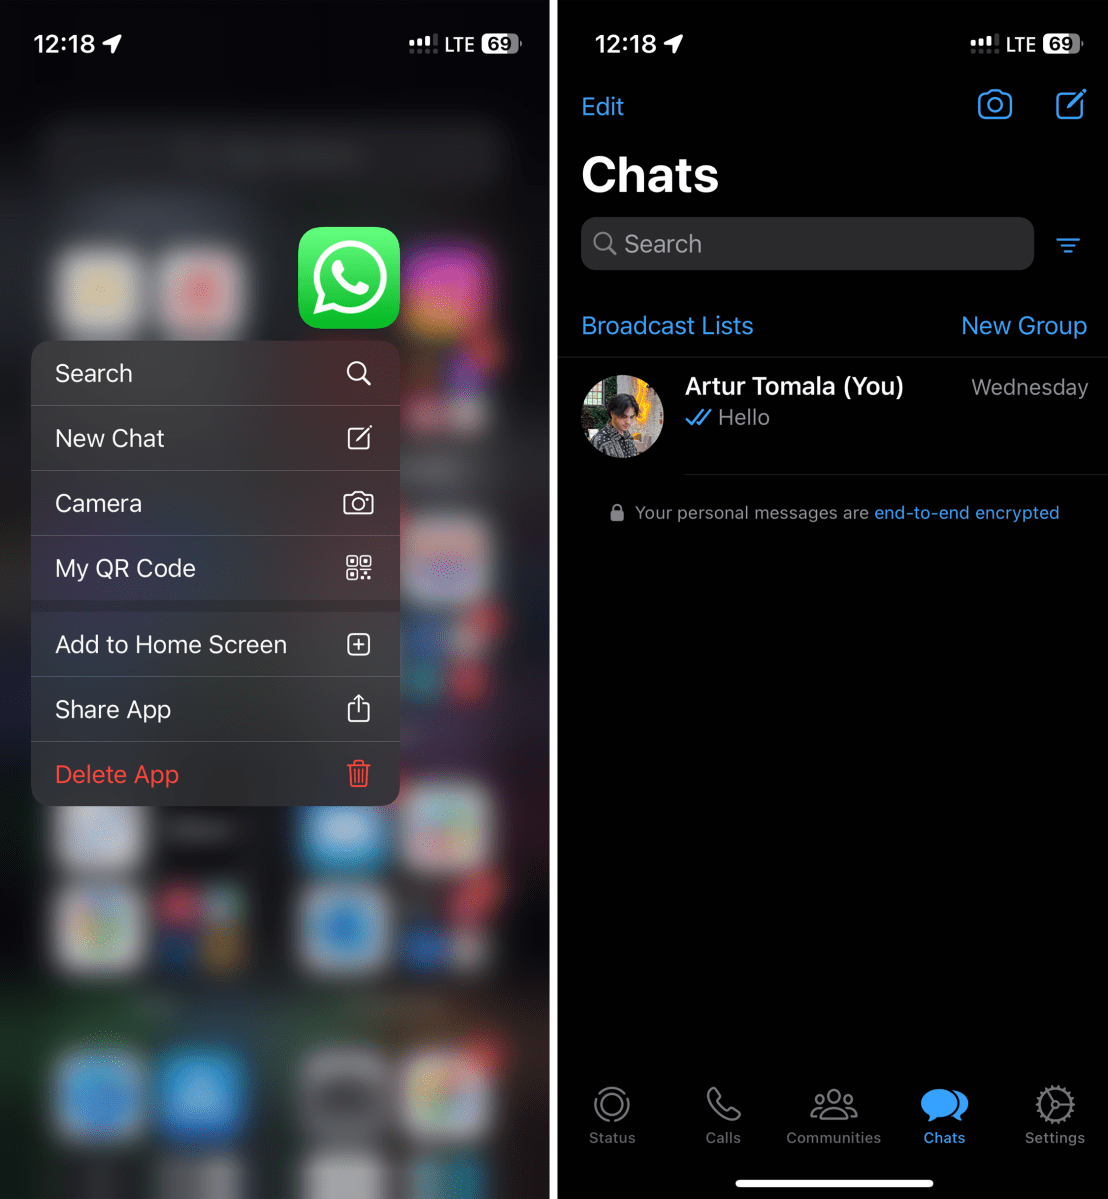 Screenshots of WhatsApp on iOS